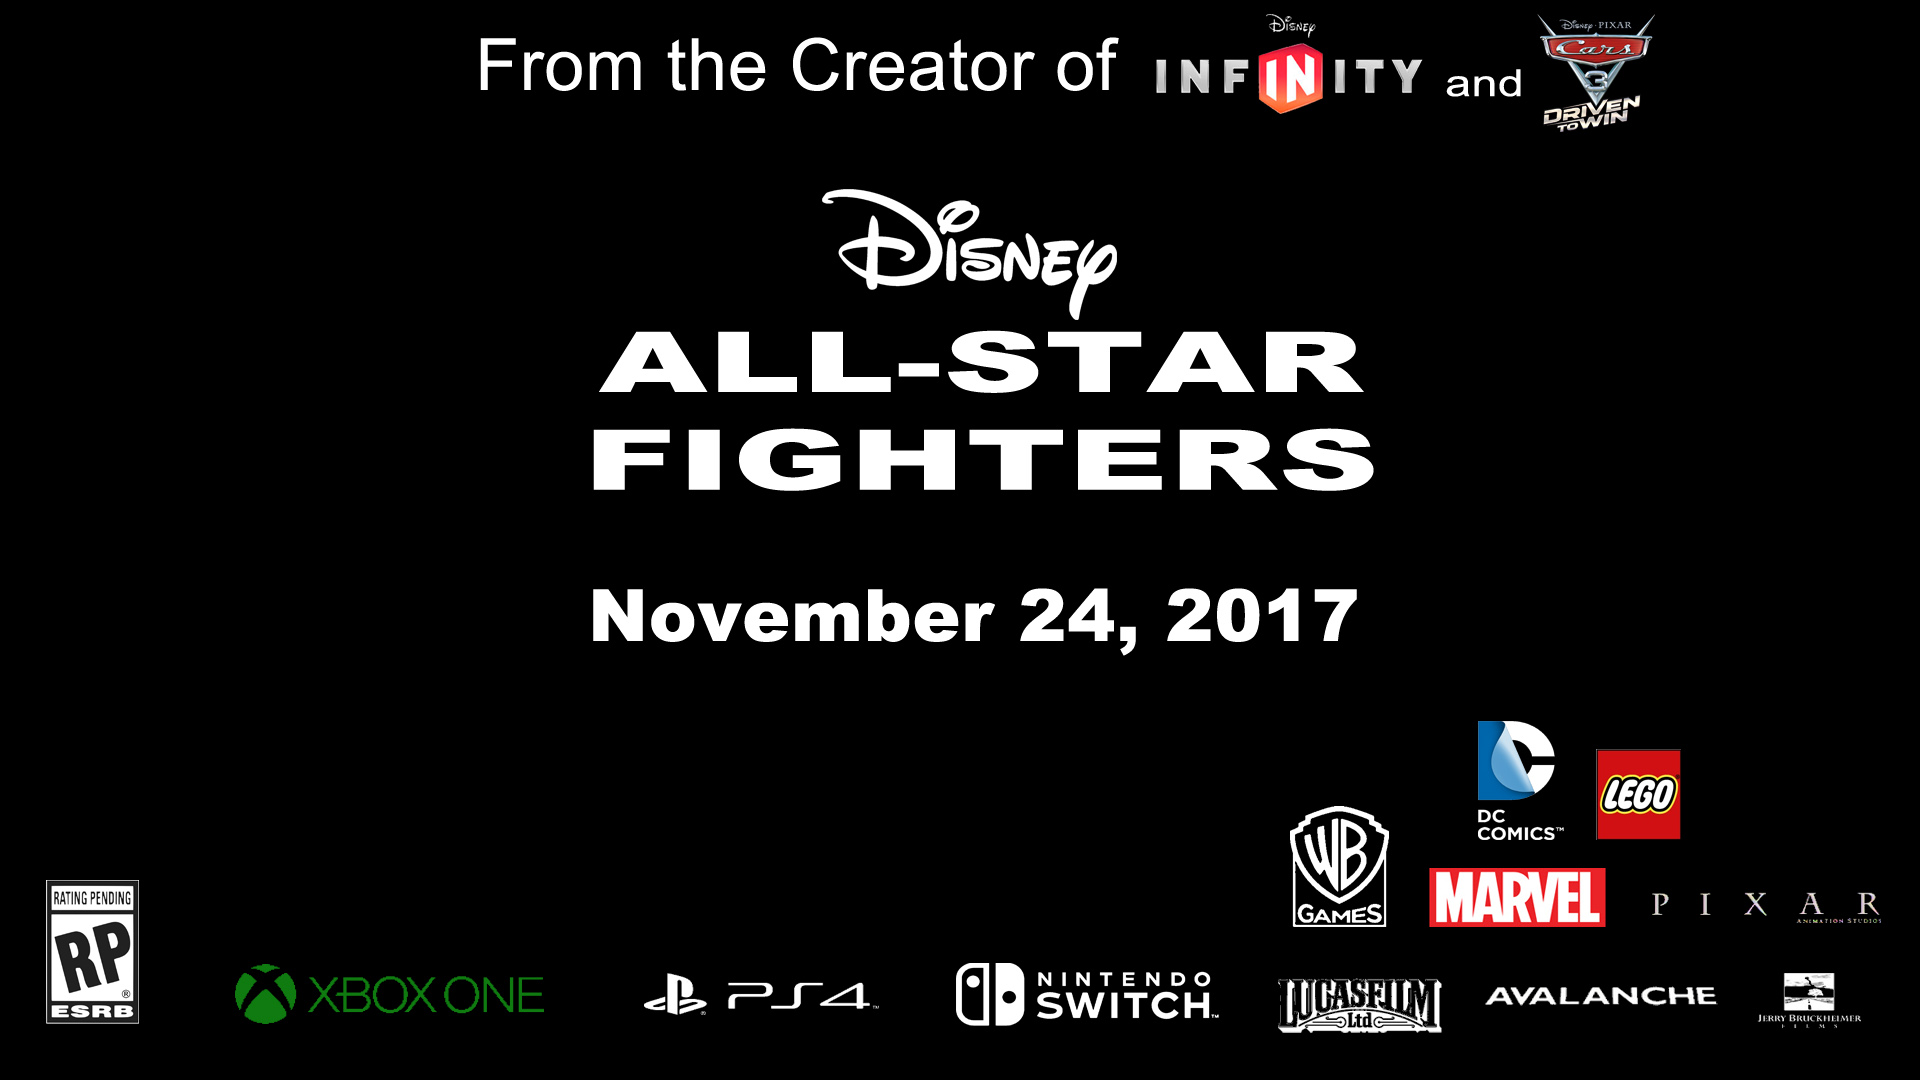 Disney All-Star Fighters (2) by Rainbow-Dash-Rockz